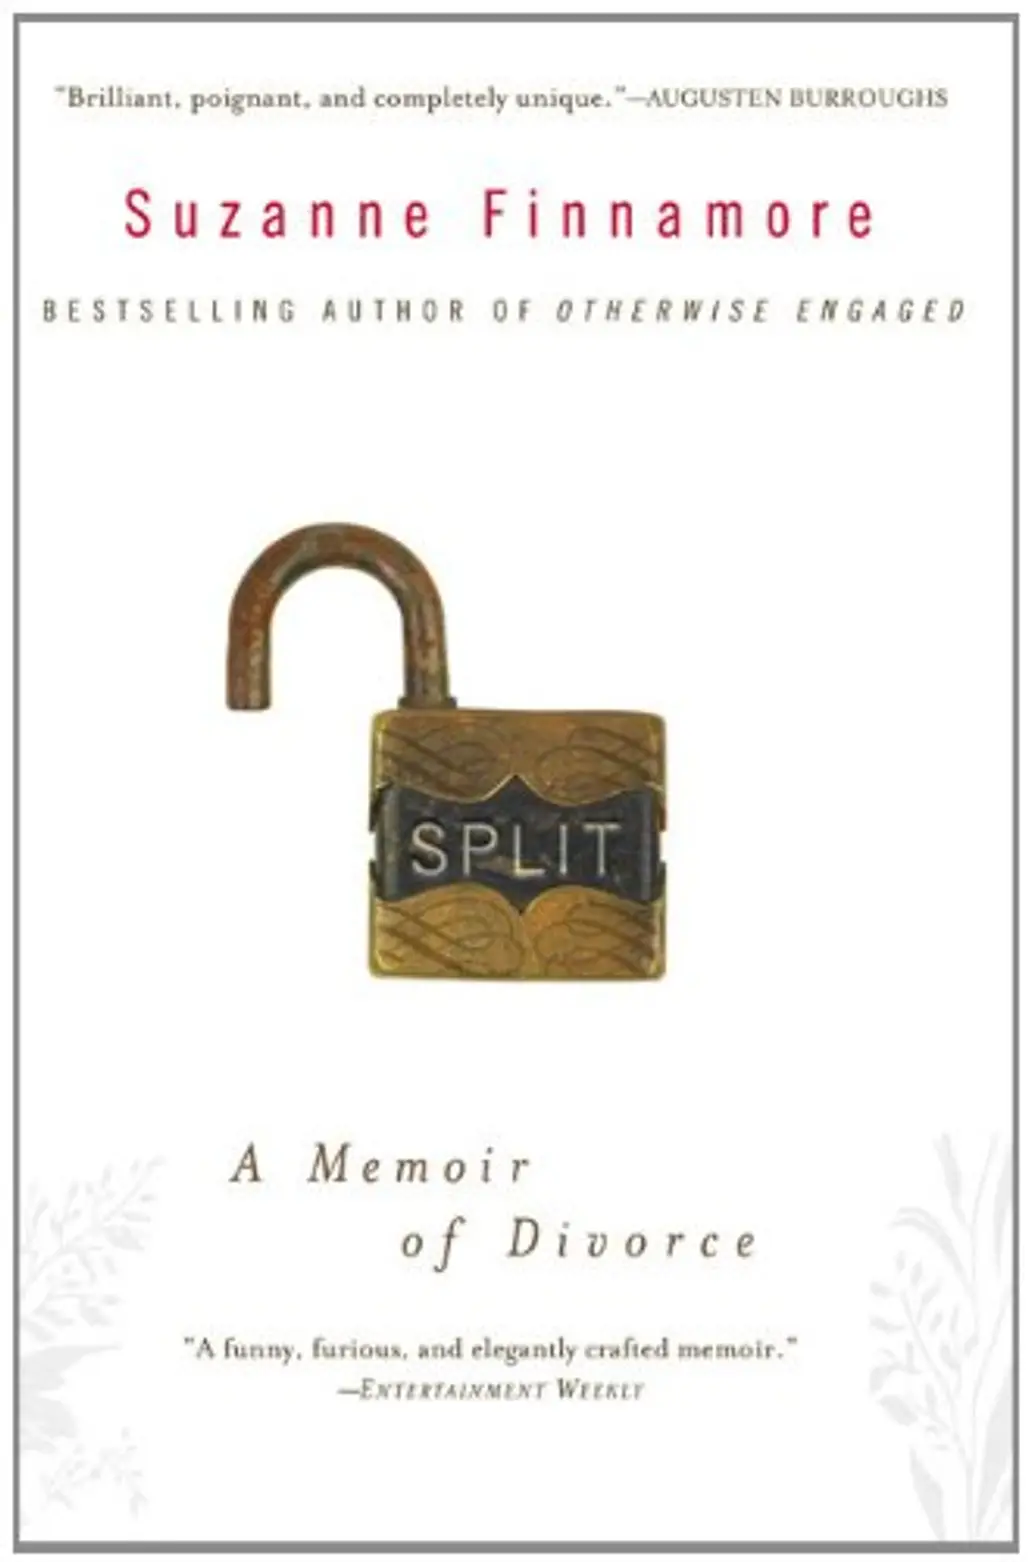 Split: a Memoir of Divorce by Suzanne Finnamore